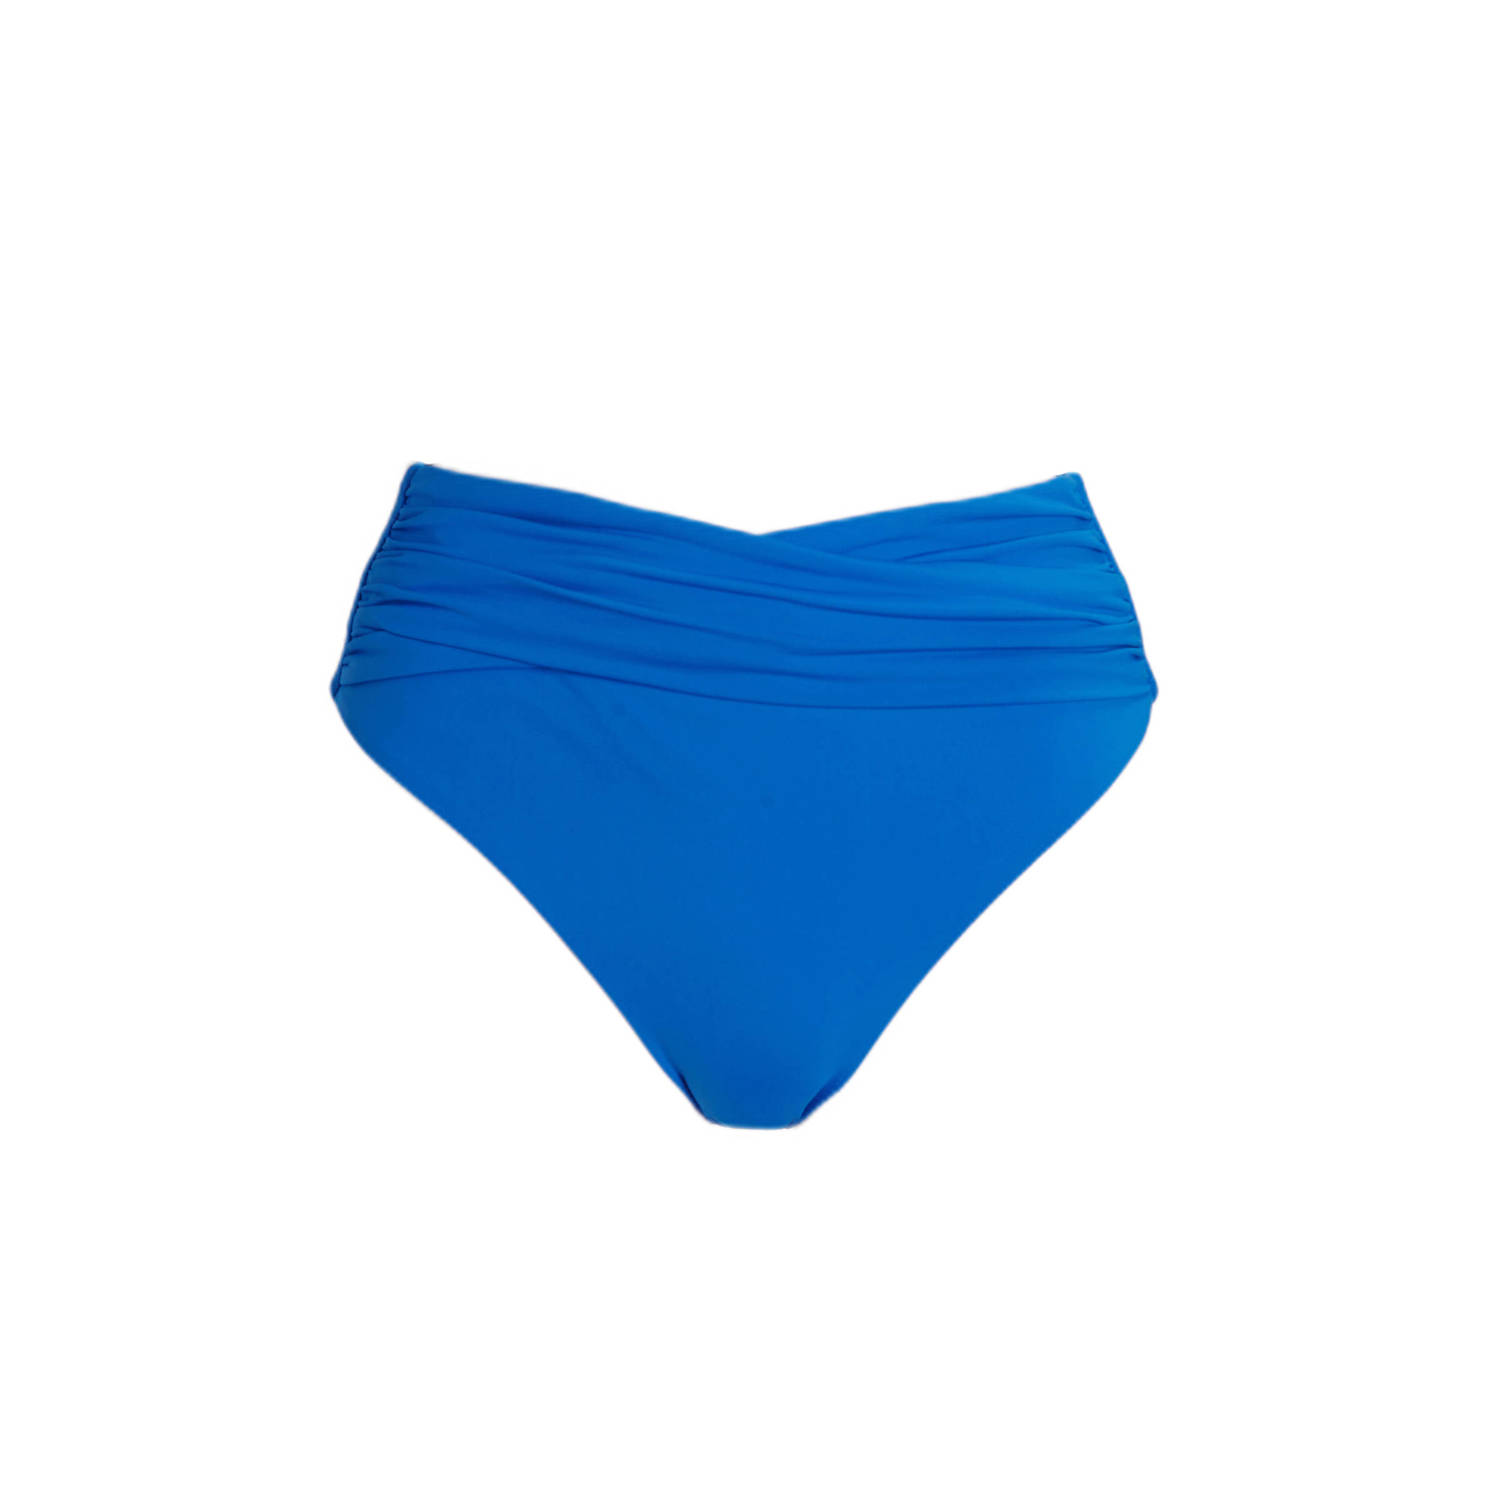 Seafolly high waist bikinibroekje blauw